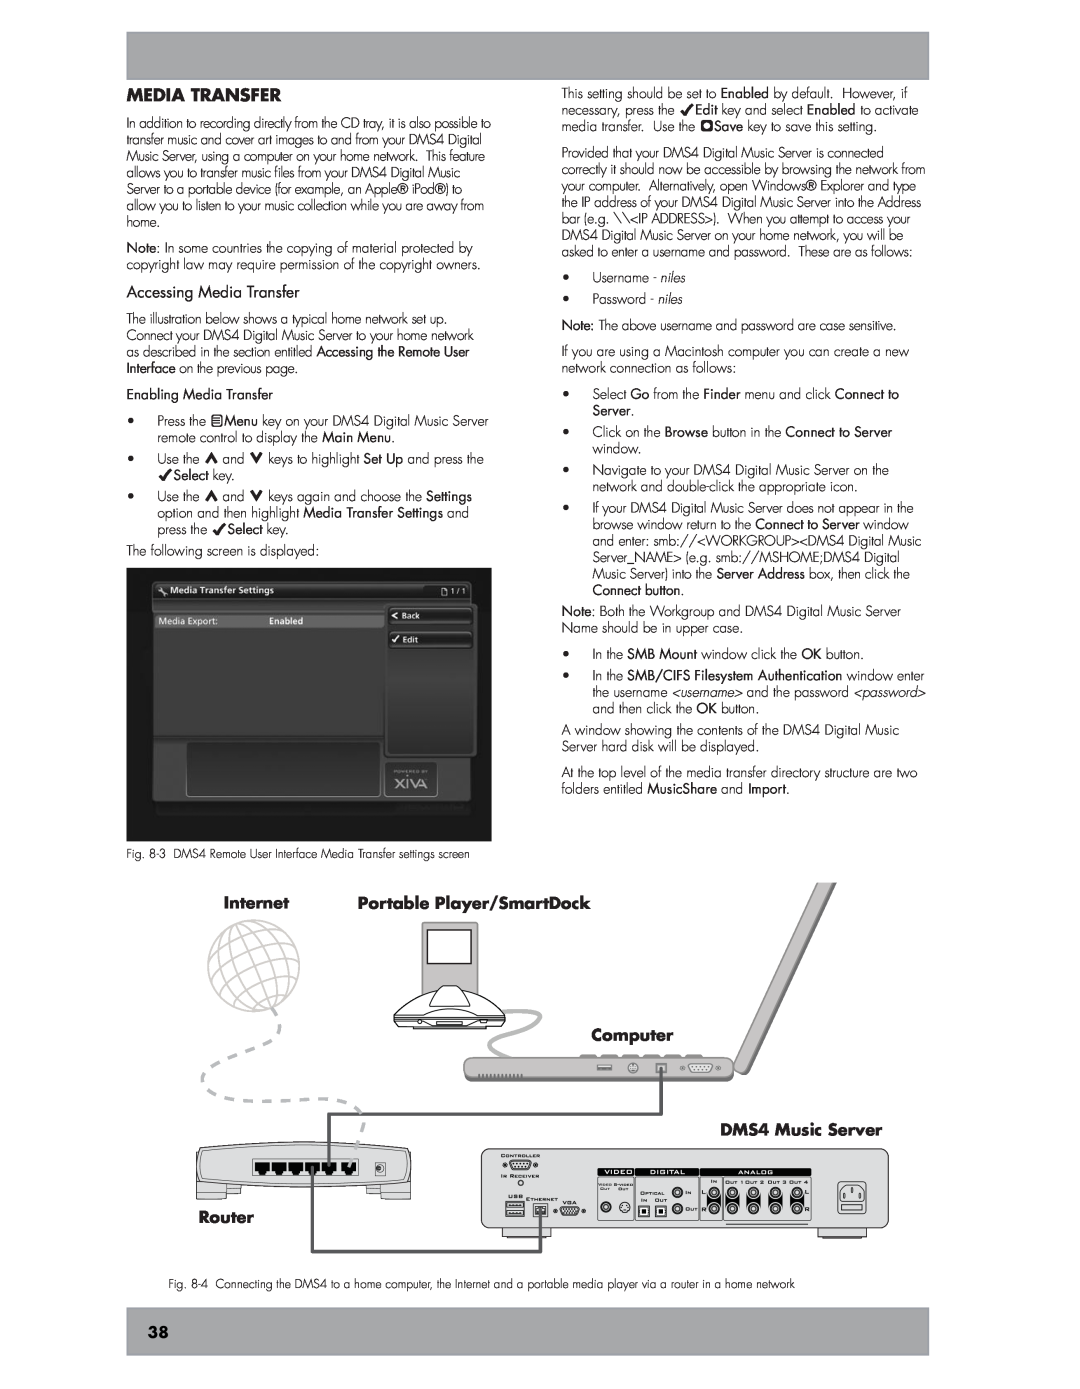 Niles Audio manual Media transfer, Internet Portable Player/SmartDock Computer DMS4 Music Server Router 